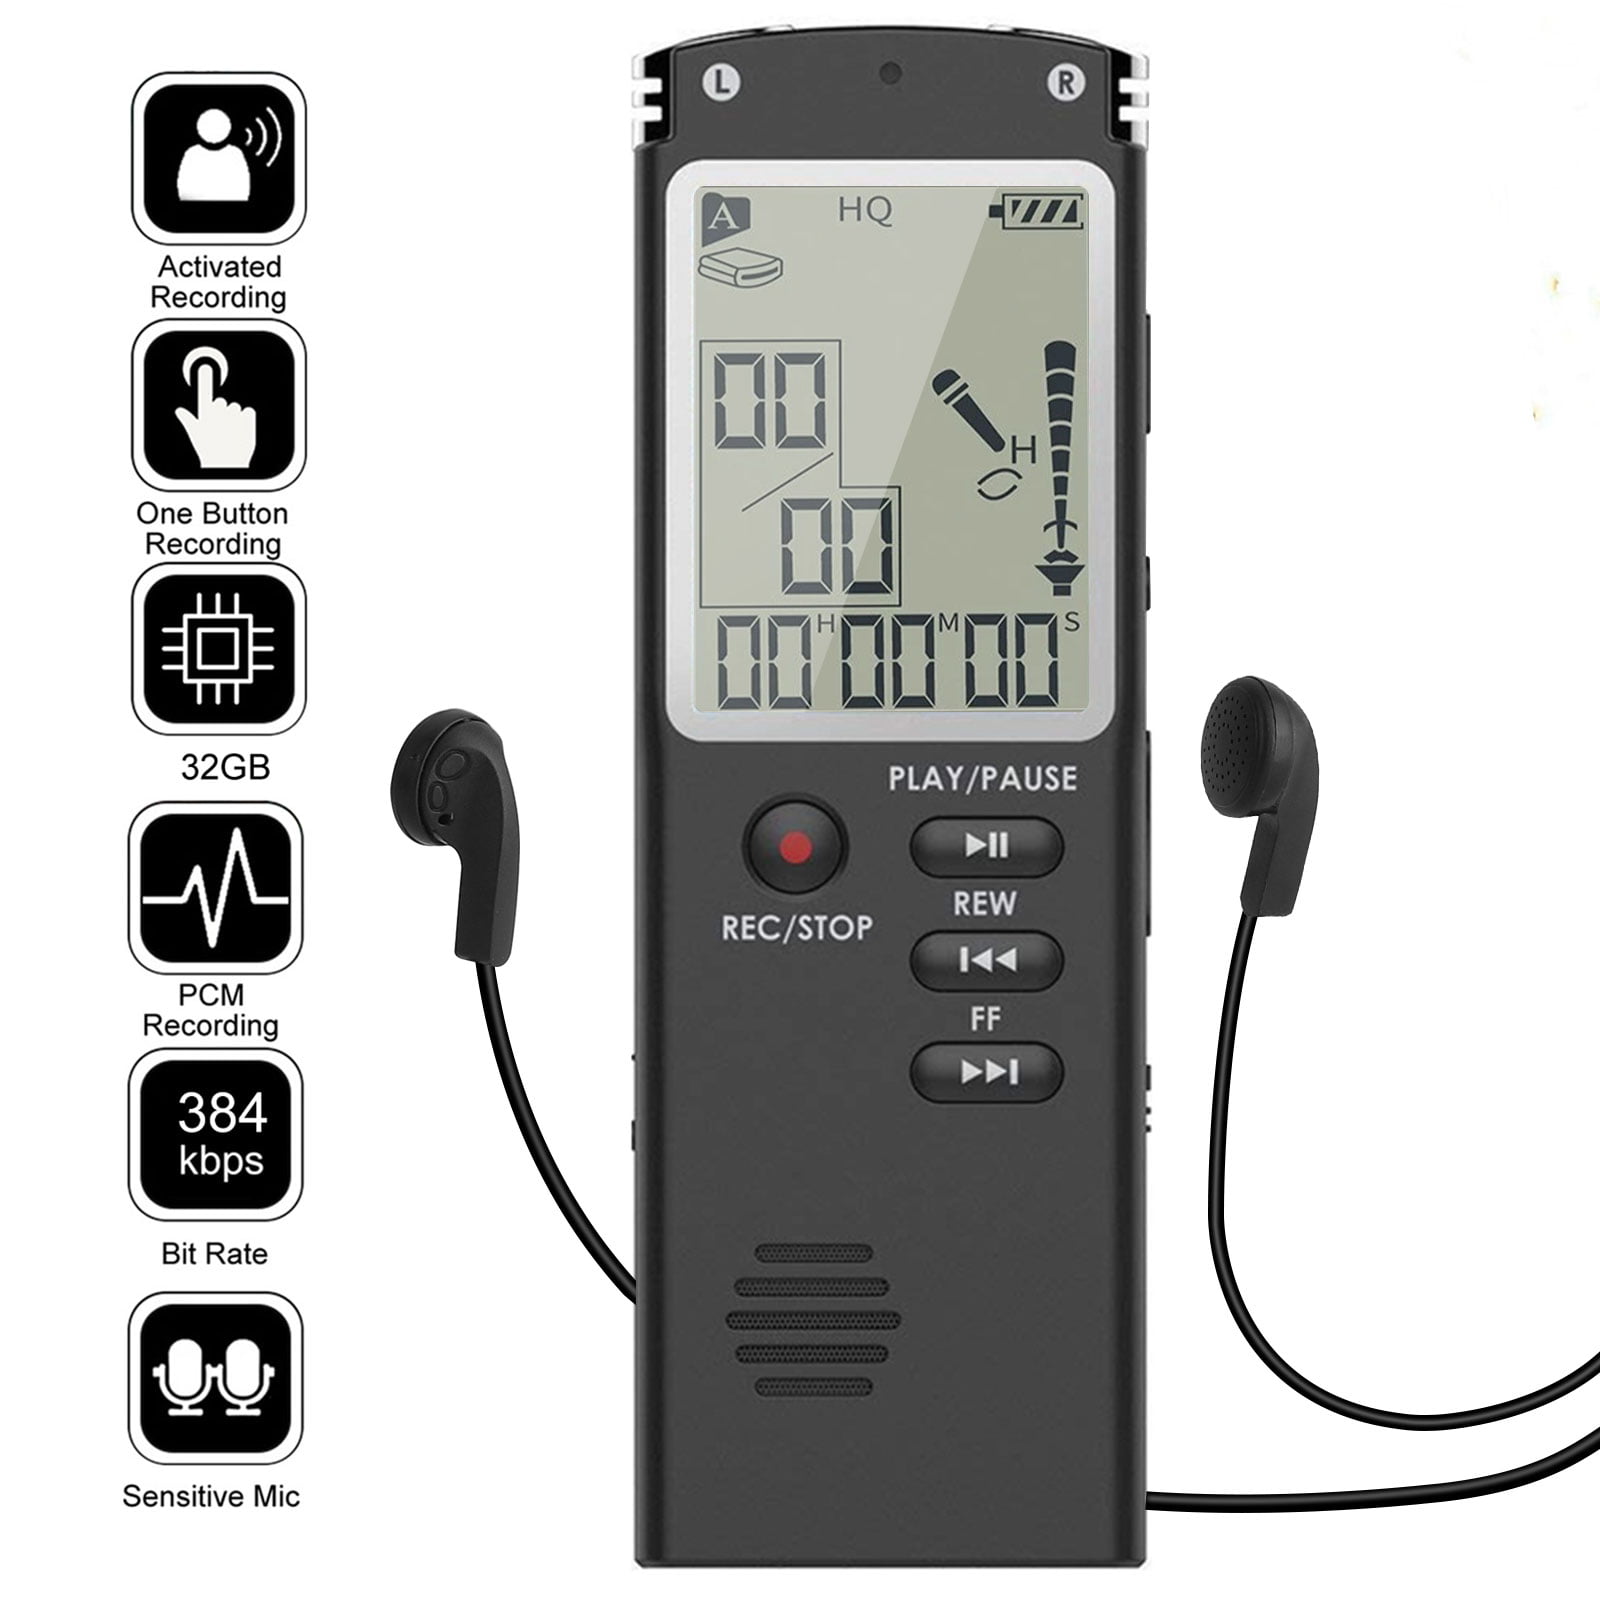 ULTRA MINI SUPER SENSITIVE SPY MICROPHONE 16GB DIGITAL VOICE RECORDER MP3 PLAYER 